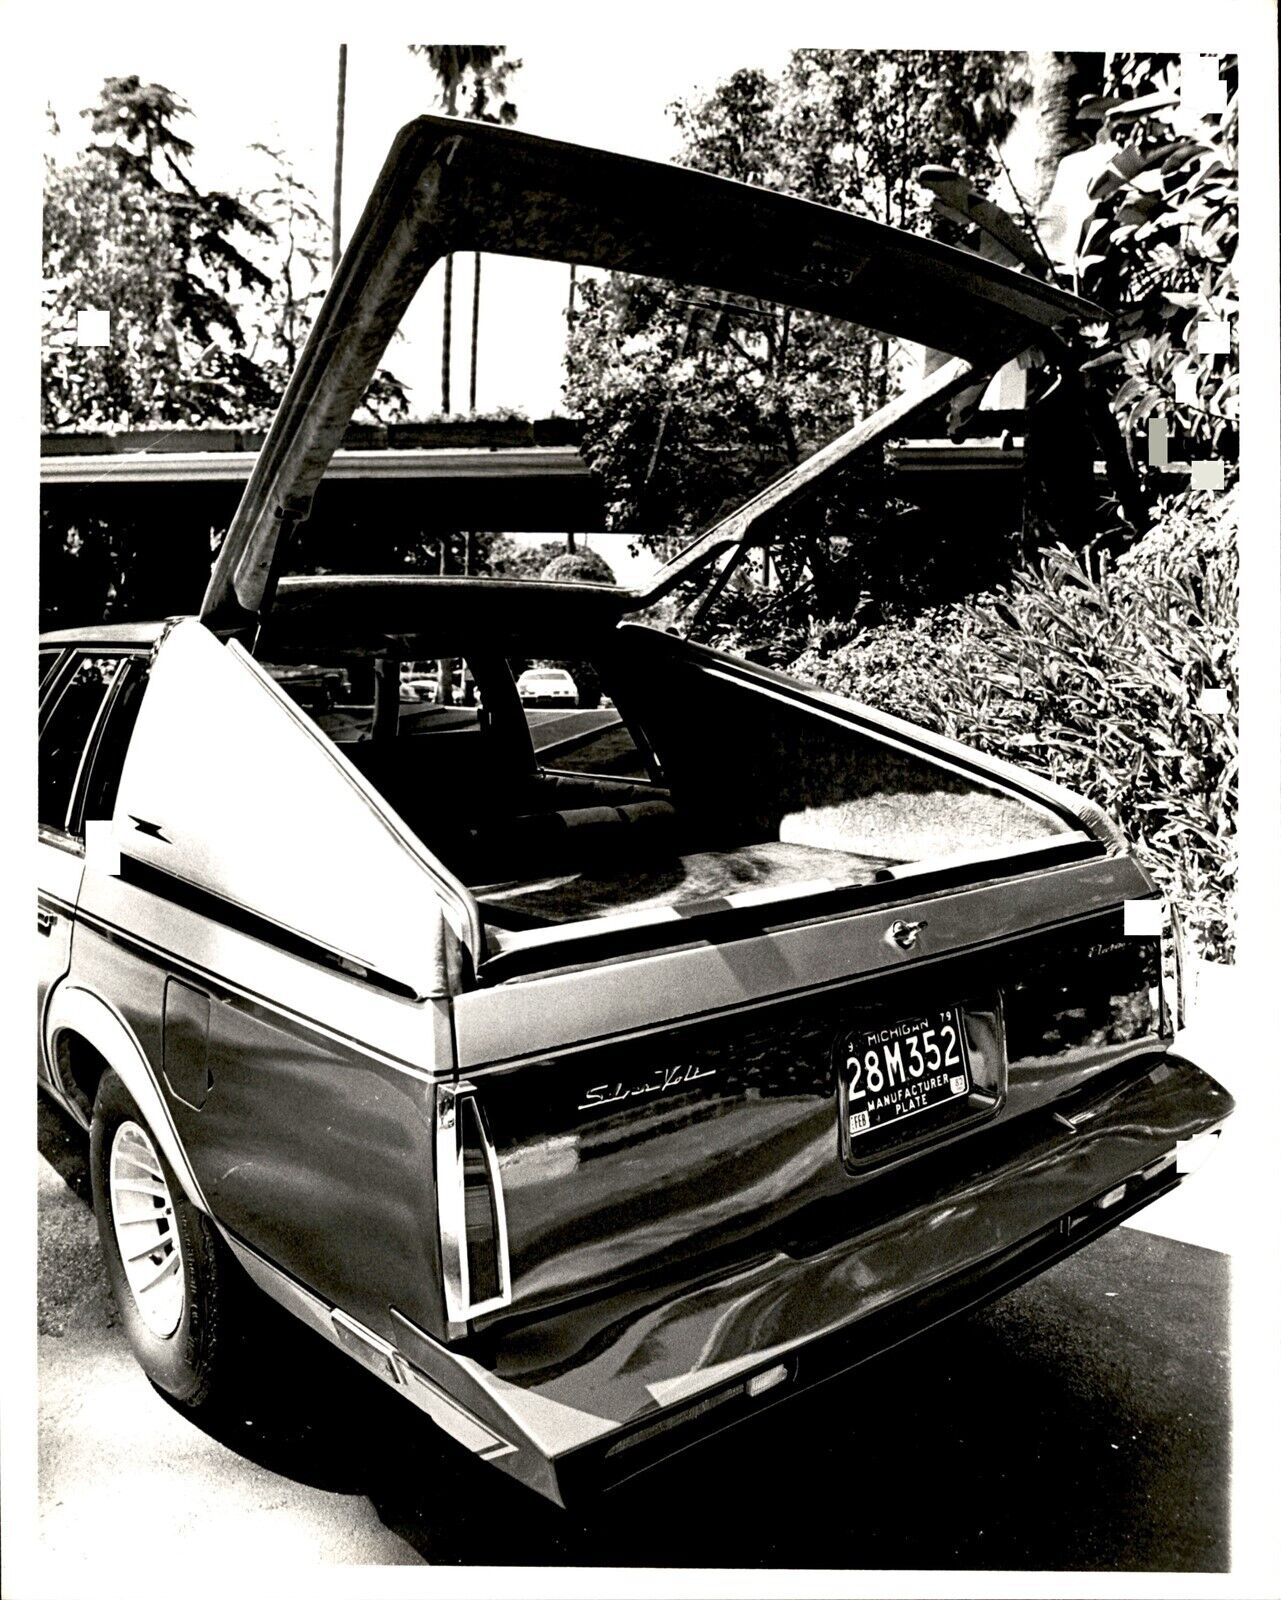 LAE4 Original Photo SILVER VOLT ELECTRIC CAR OF 1980s GENERAL MOTORS DETROIT